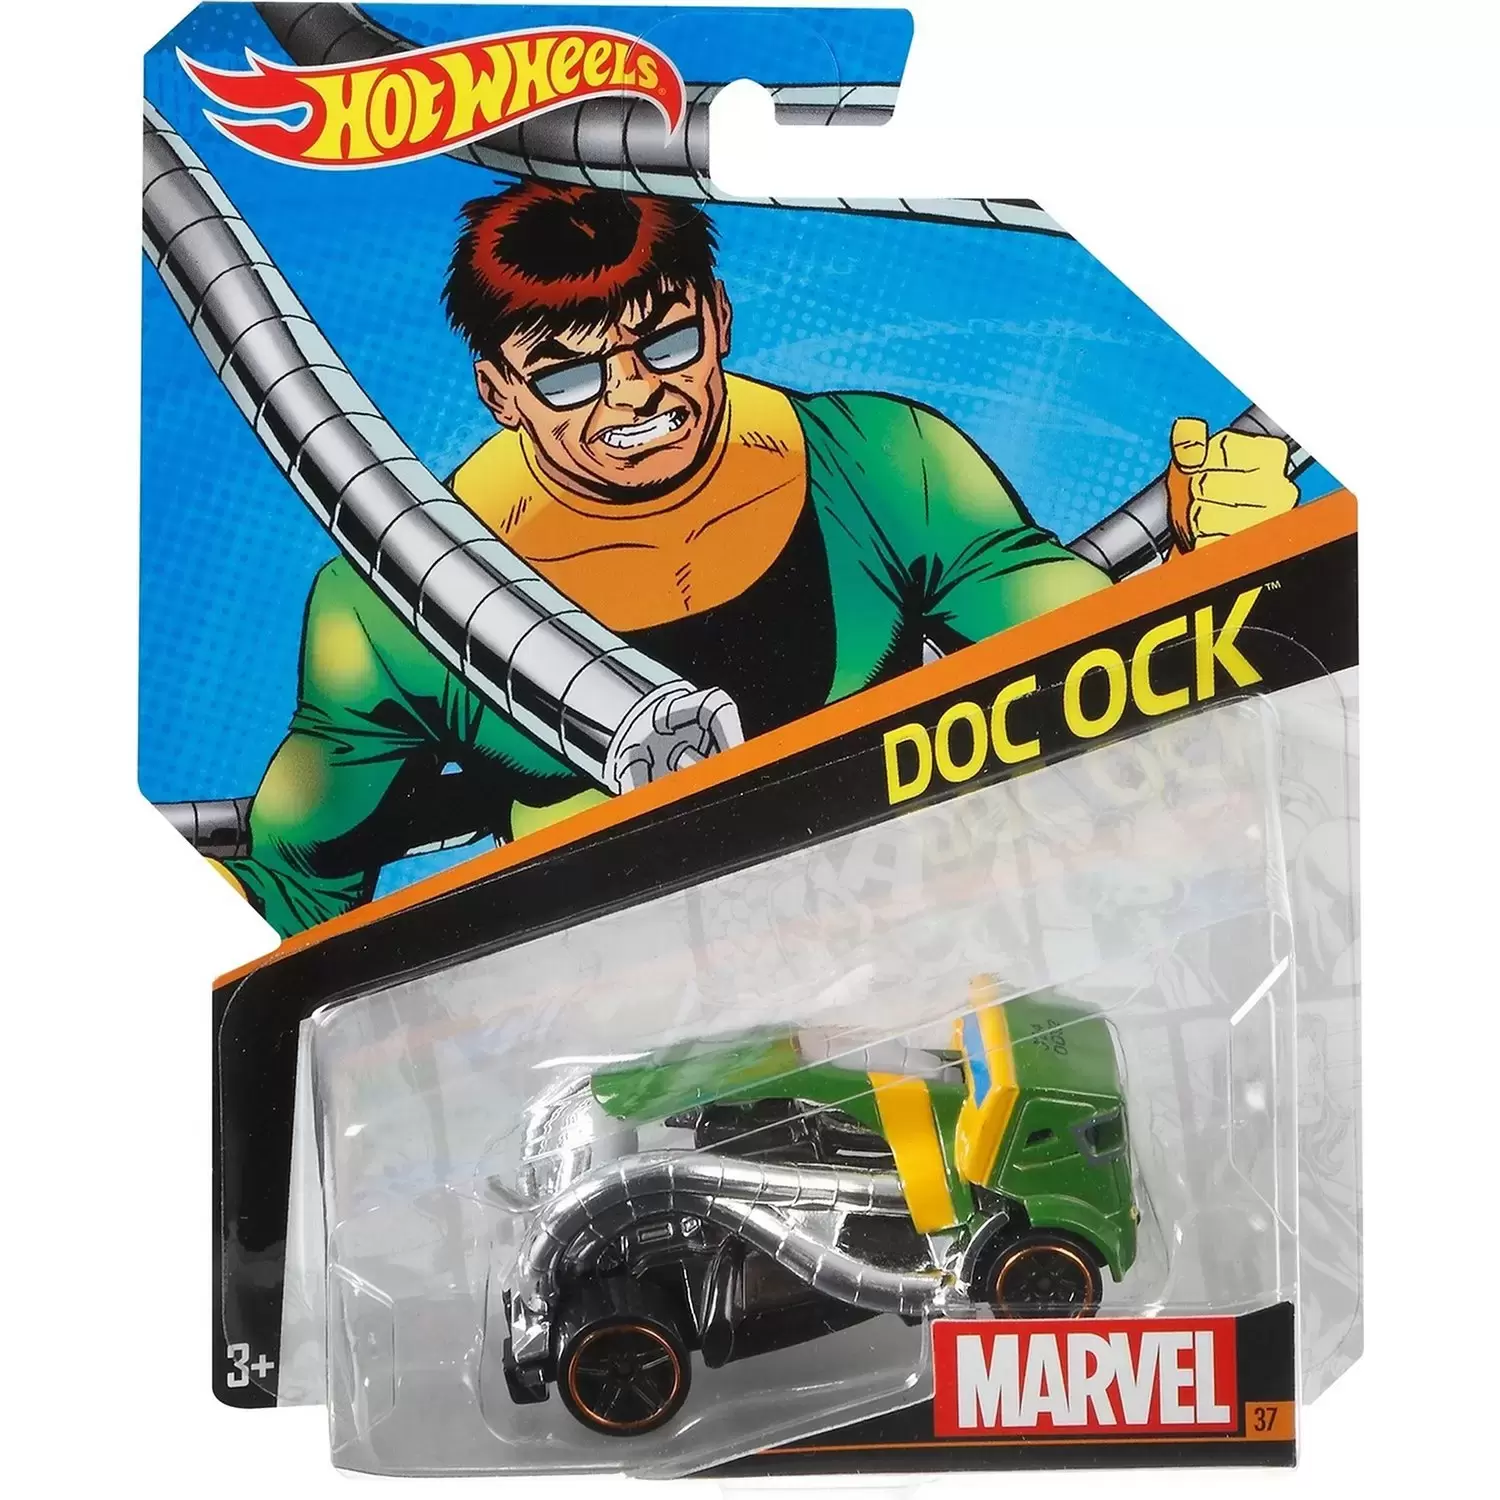 Marvel Character Cars - Doc Ock